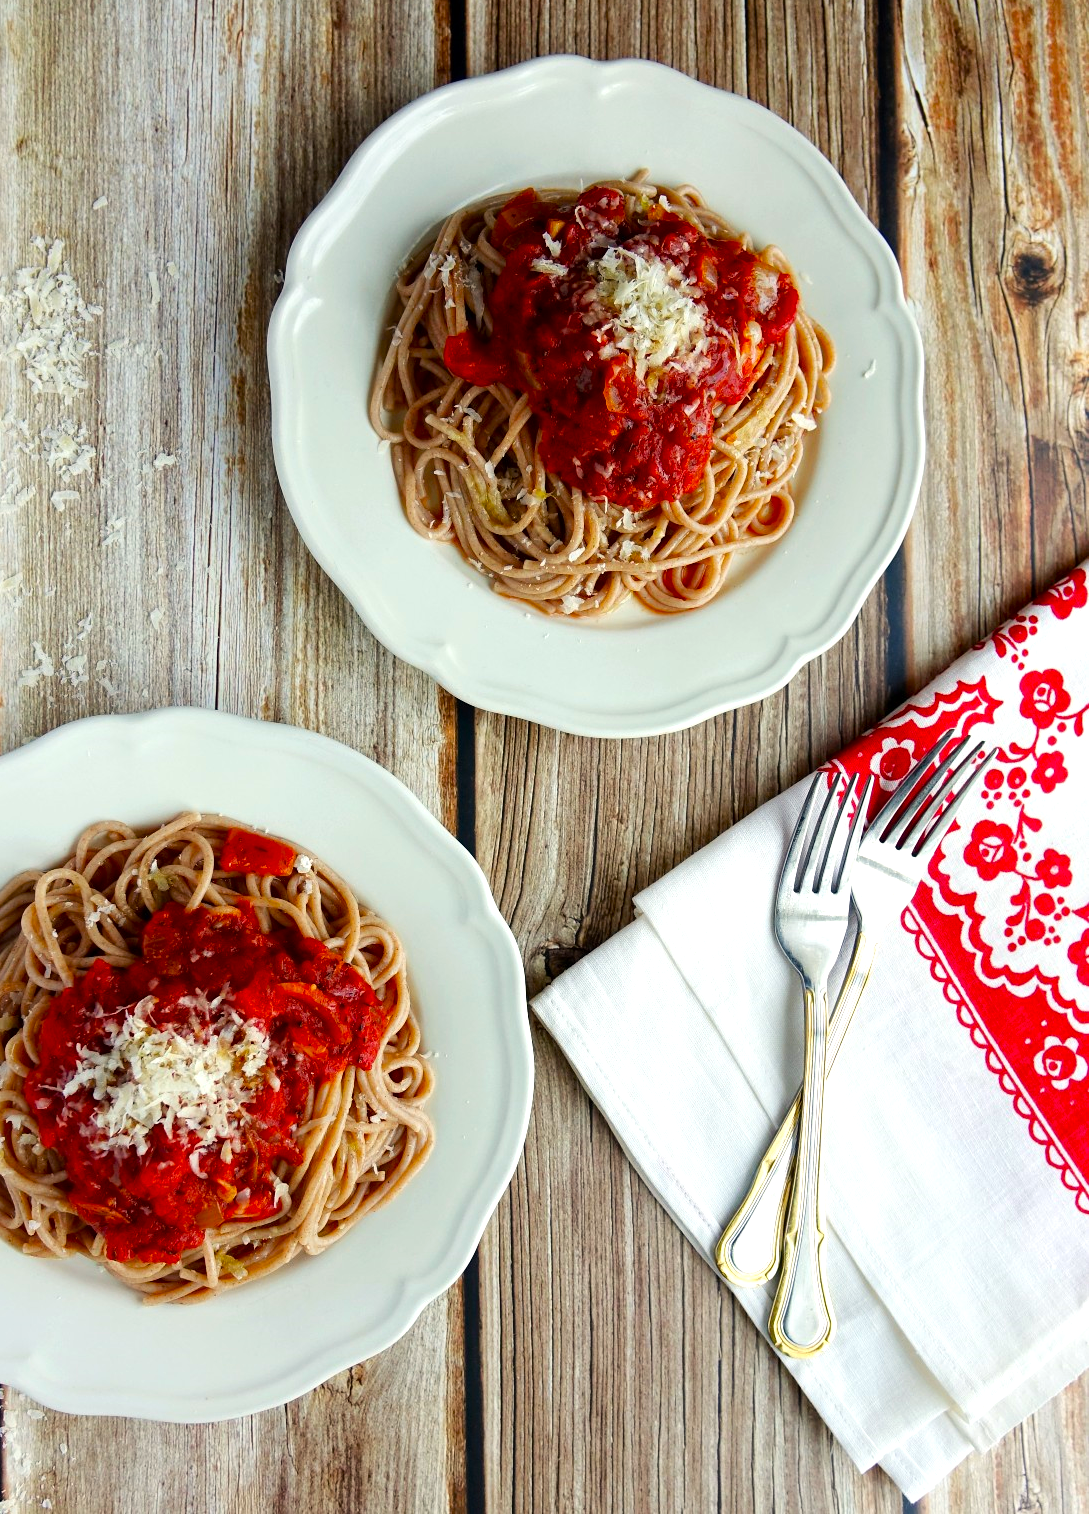 Spaghetti with tomato basil sauce